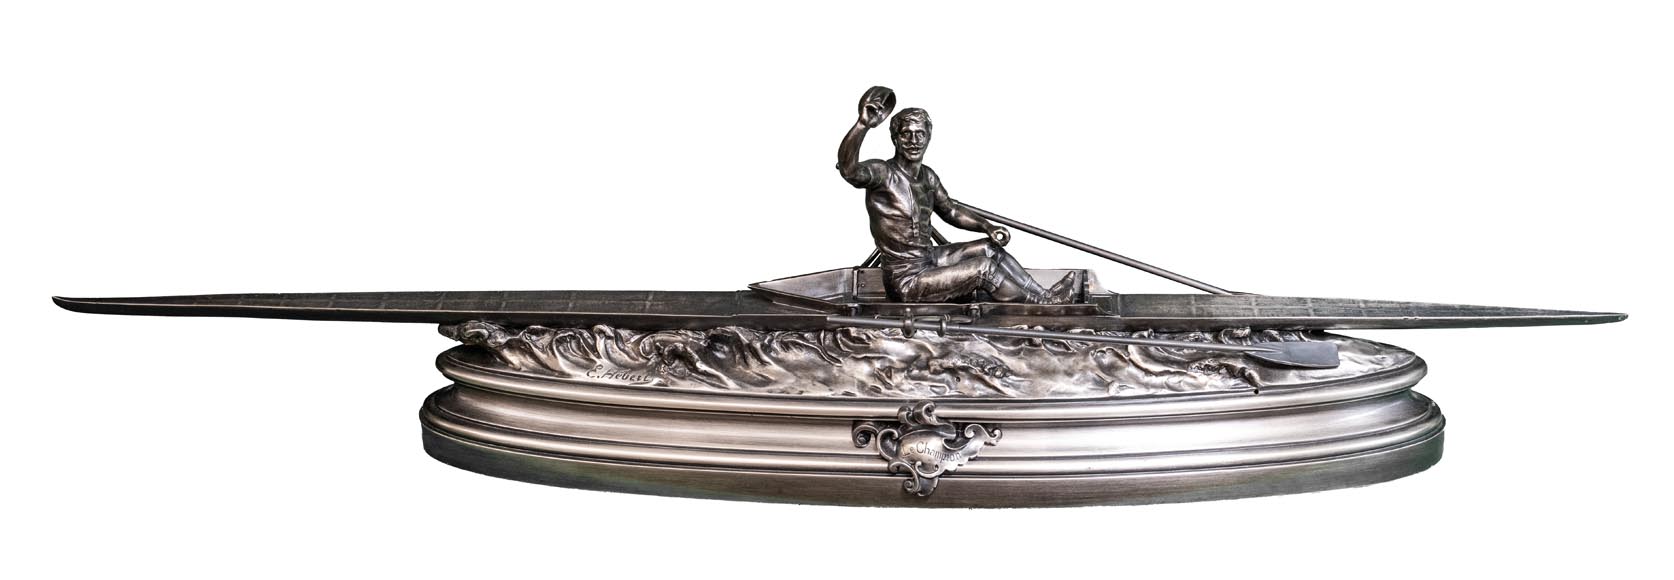 Edouart DROUOT - The oarsman, bronze sculpture-0